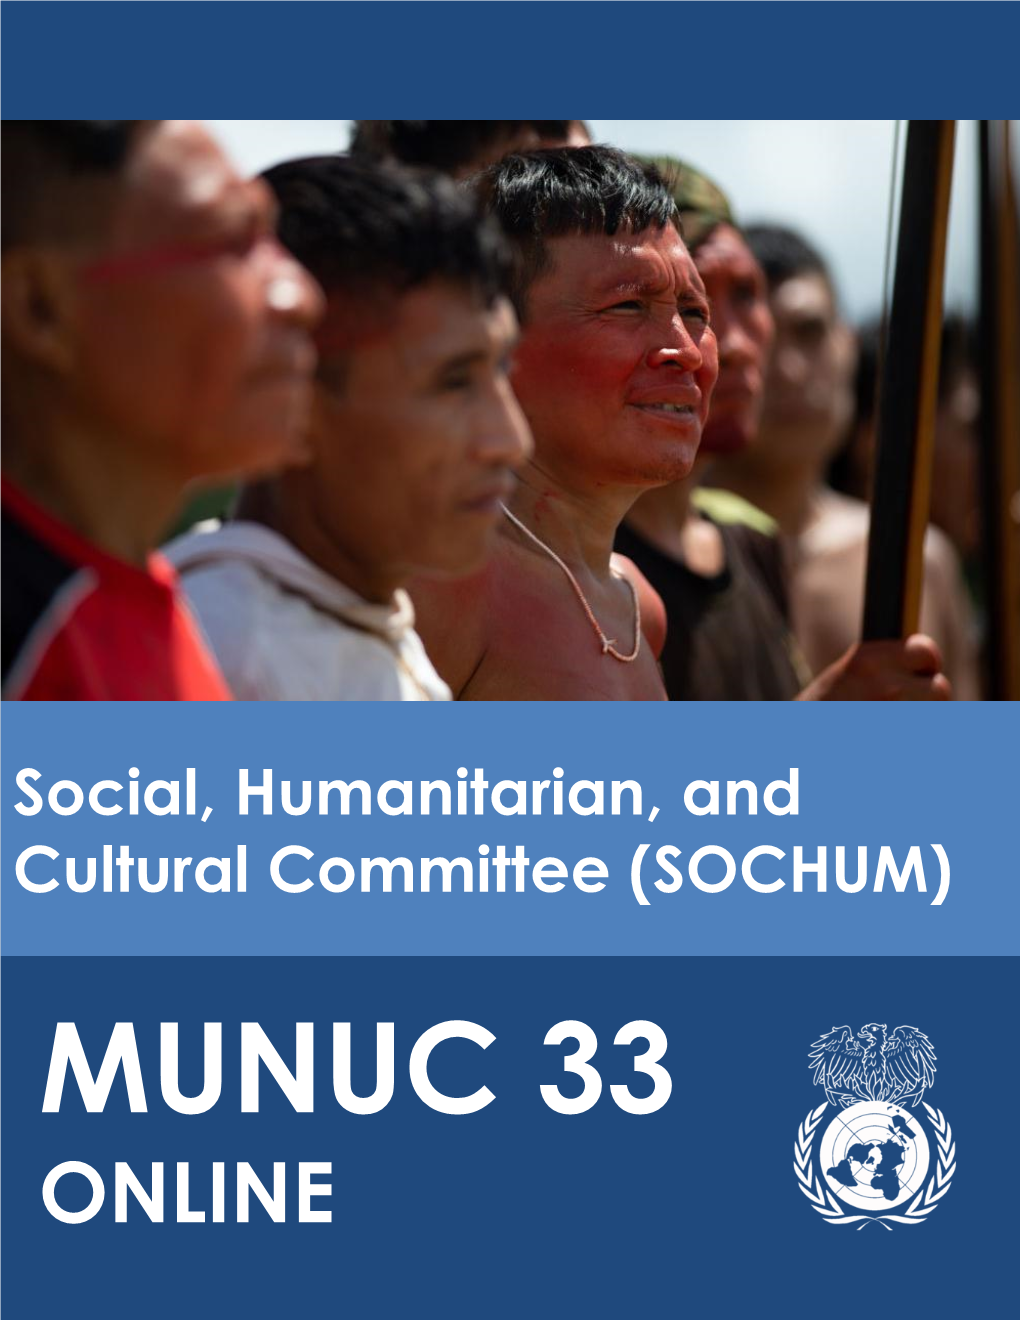 Social, Humanitarian, and Cultural Committee (SOCHUM) MUNUC 33 ONLINE 1 Social, Humanitarian, and Cultural Committee| MUNUC 33 Online TABLE of CONTENTS